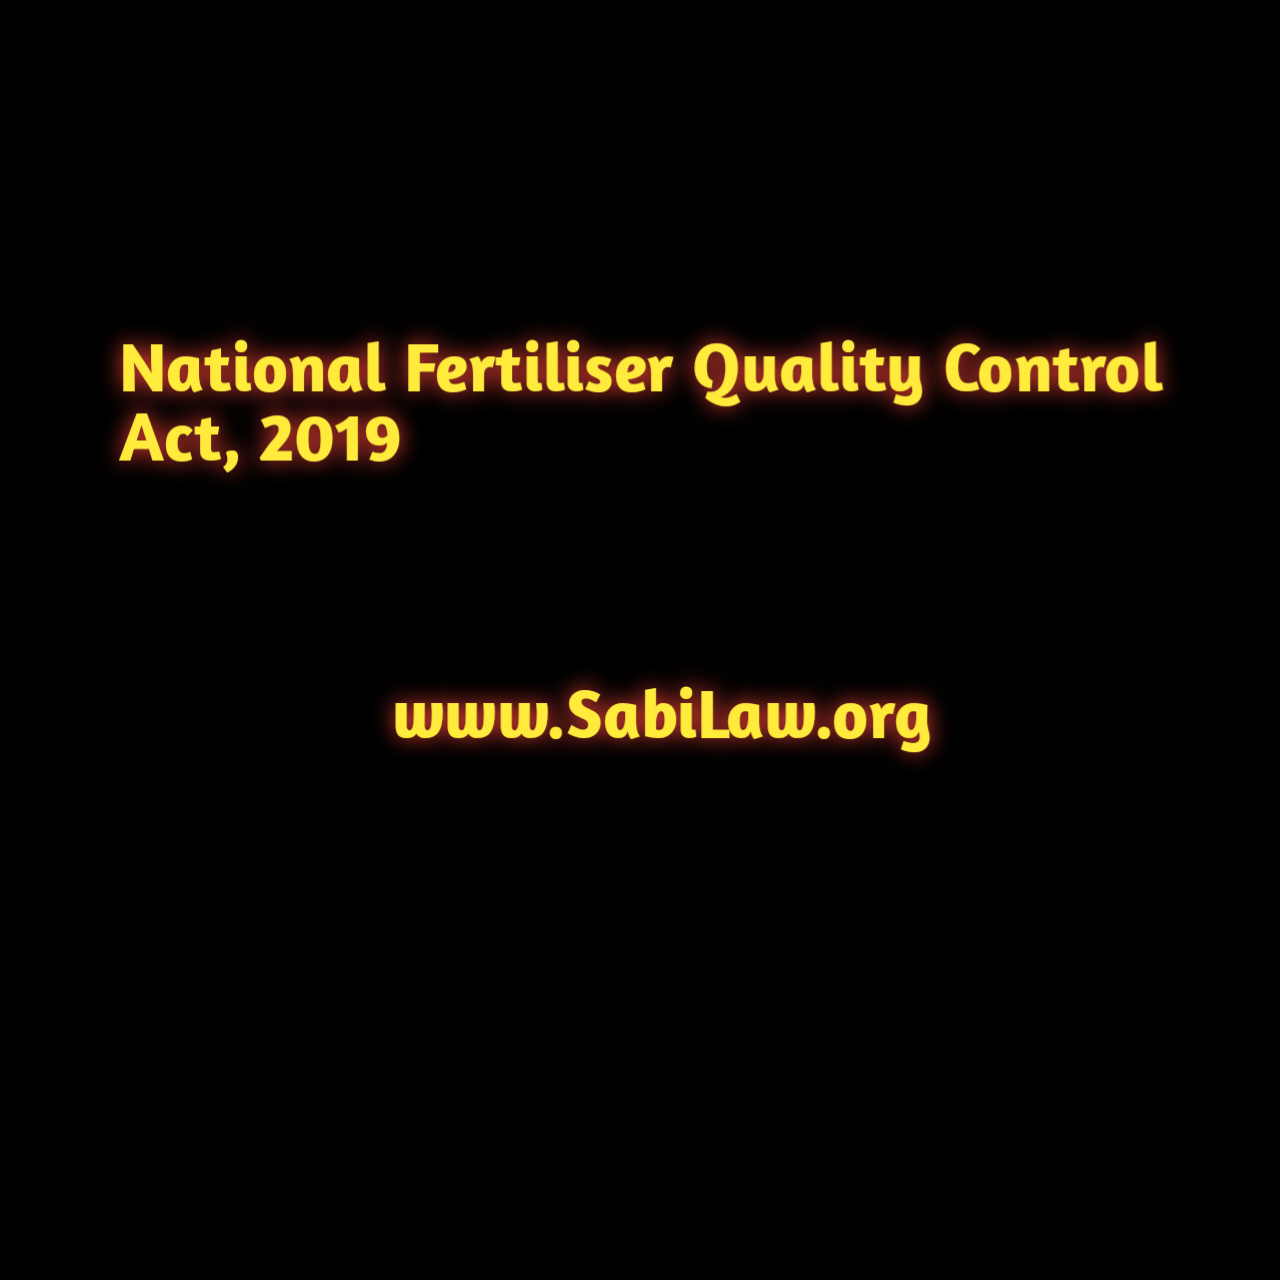 National Fertiliser Quality Control Act, 2019.